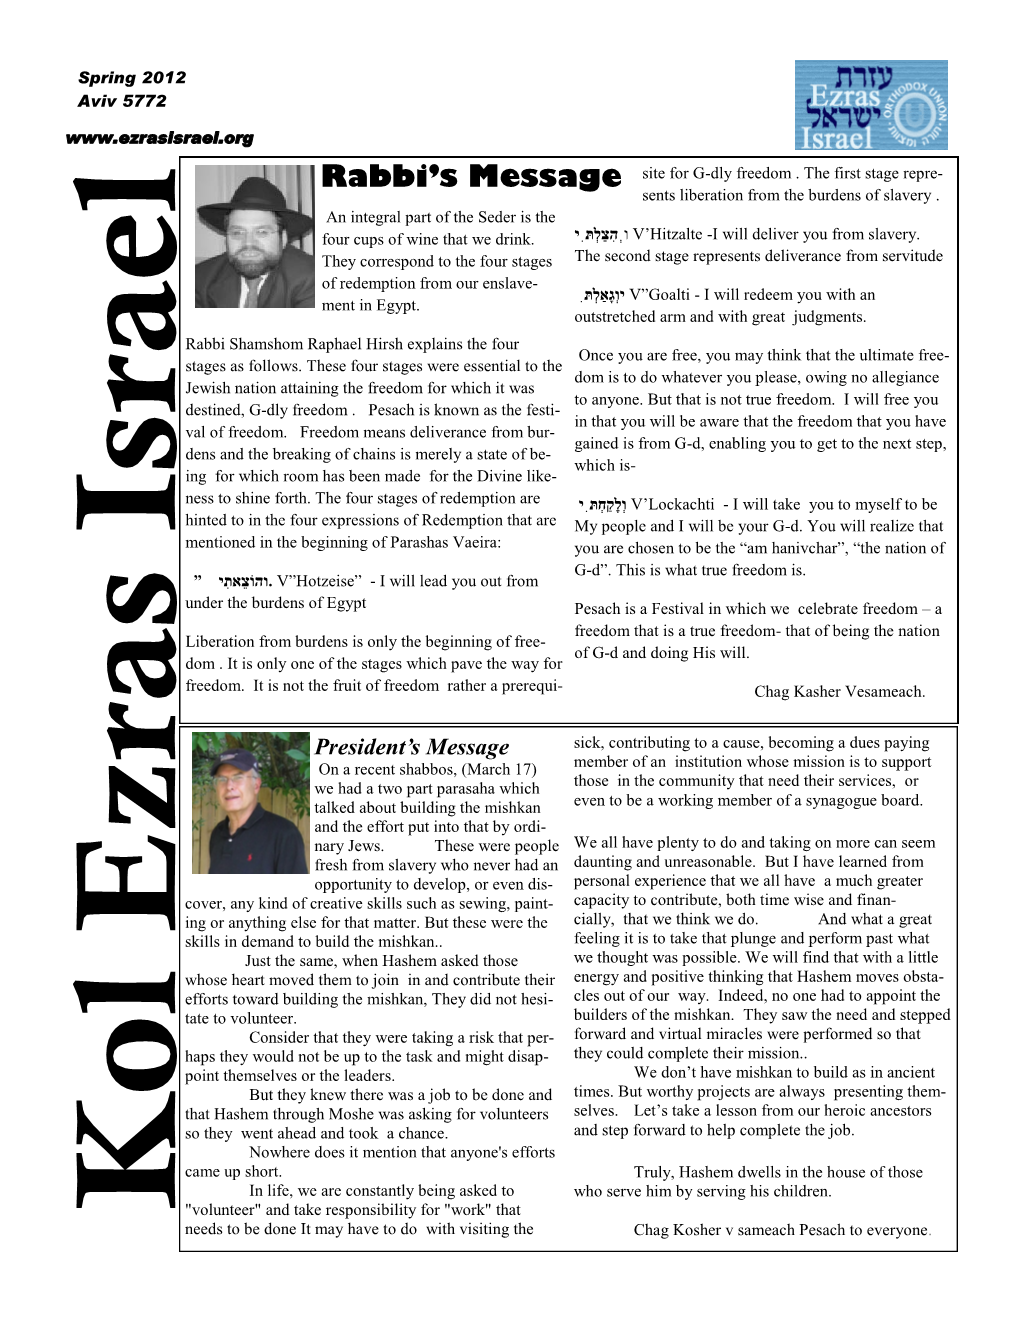 Spring 2012 Aviv 5772 Rabbi’S Message Site for G-Dly Freedom